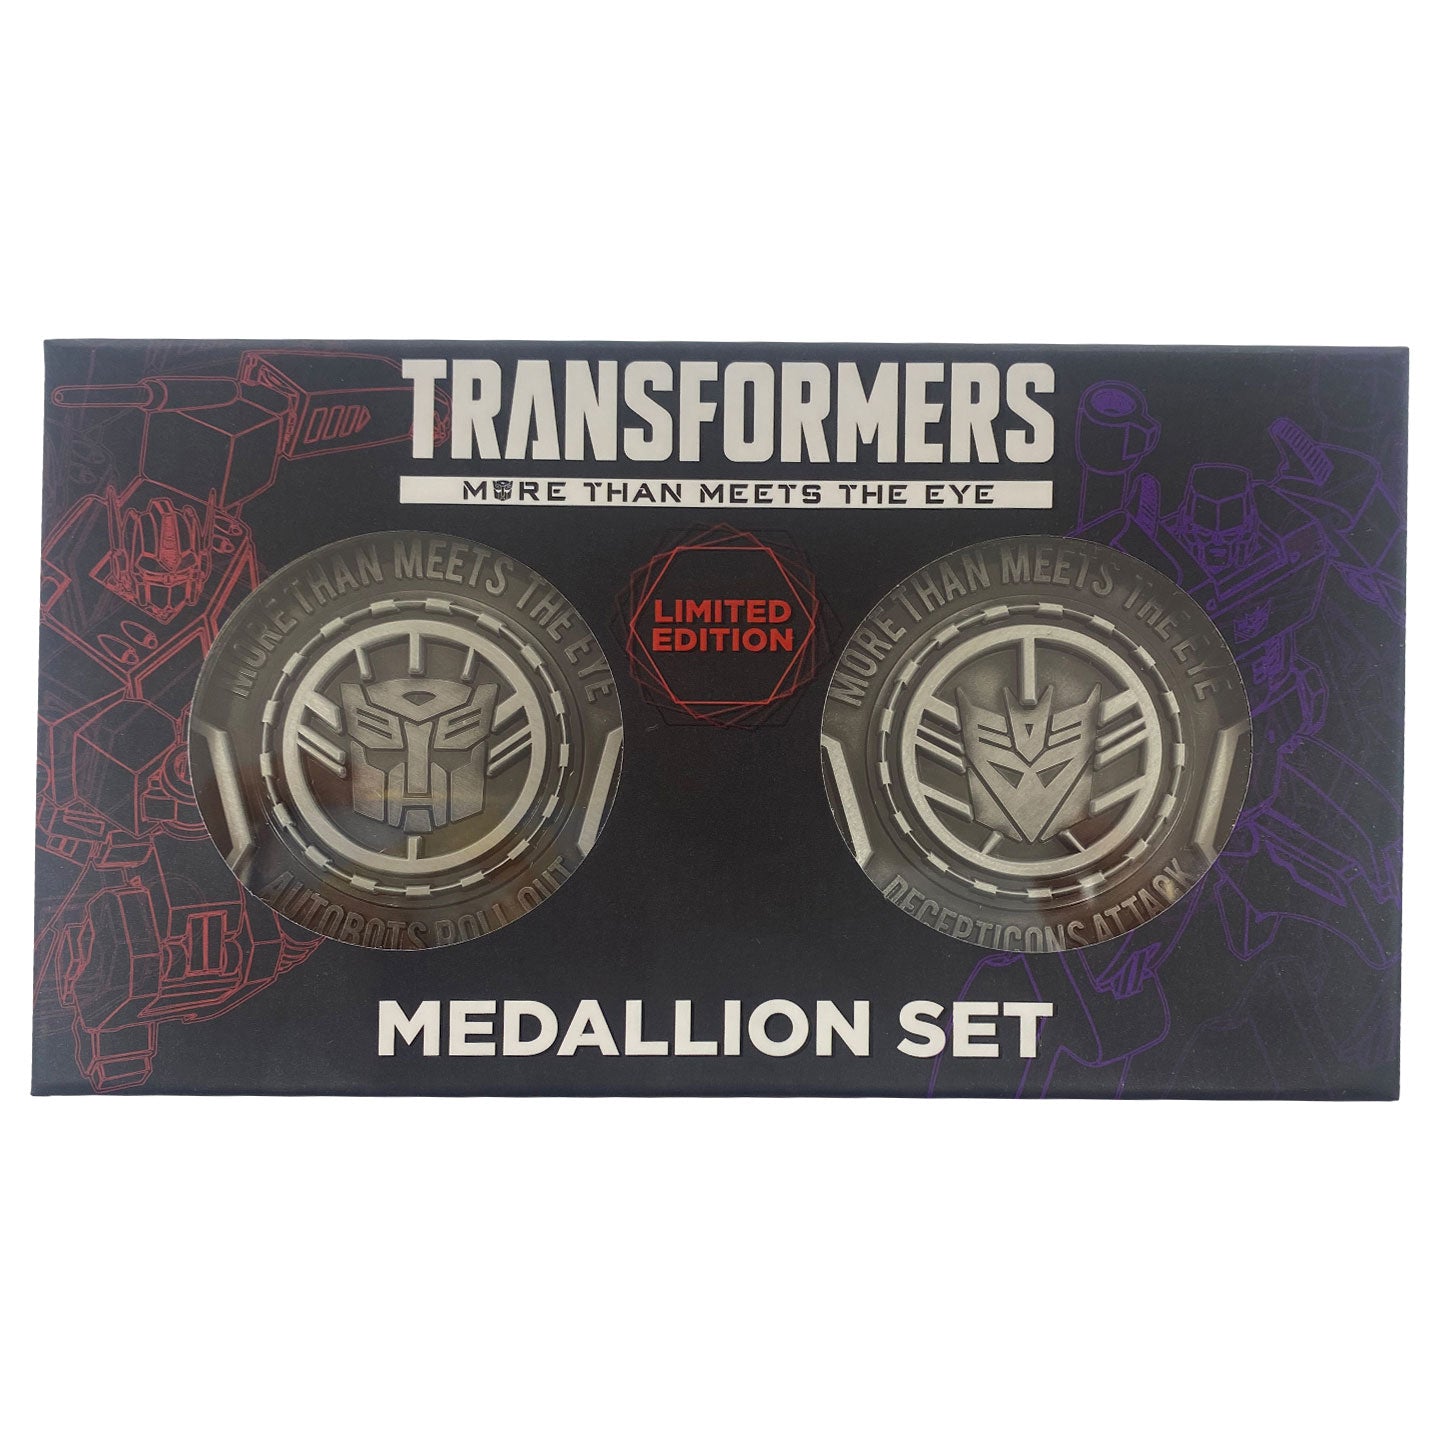 Medallion Transformers